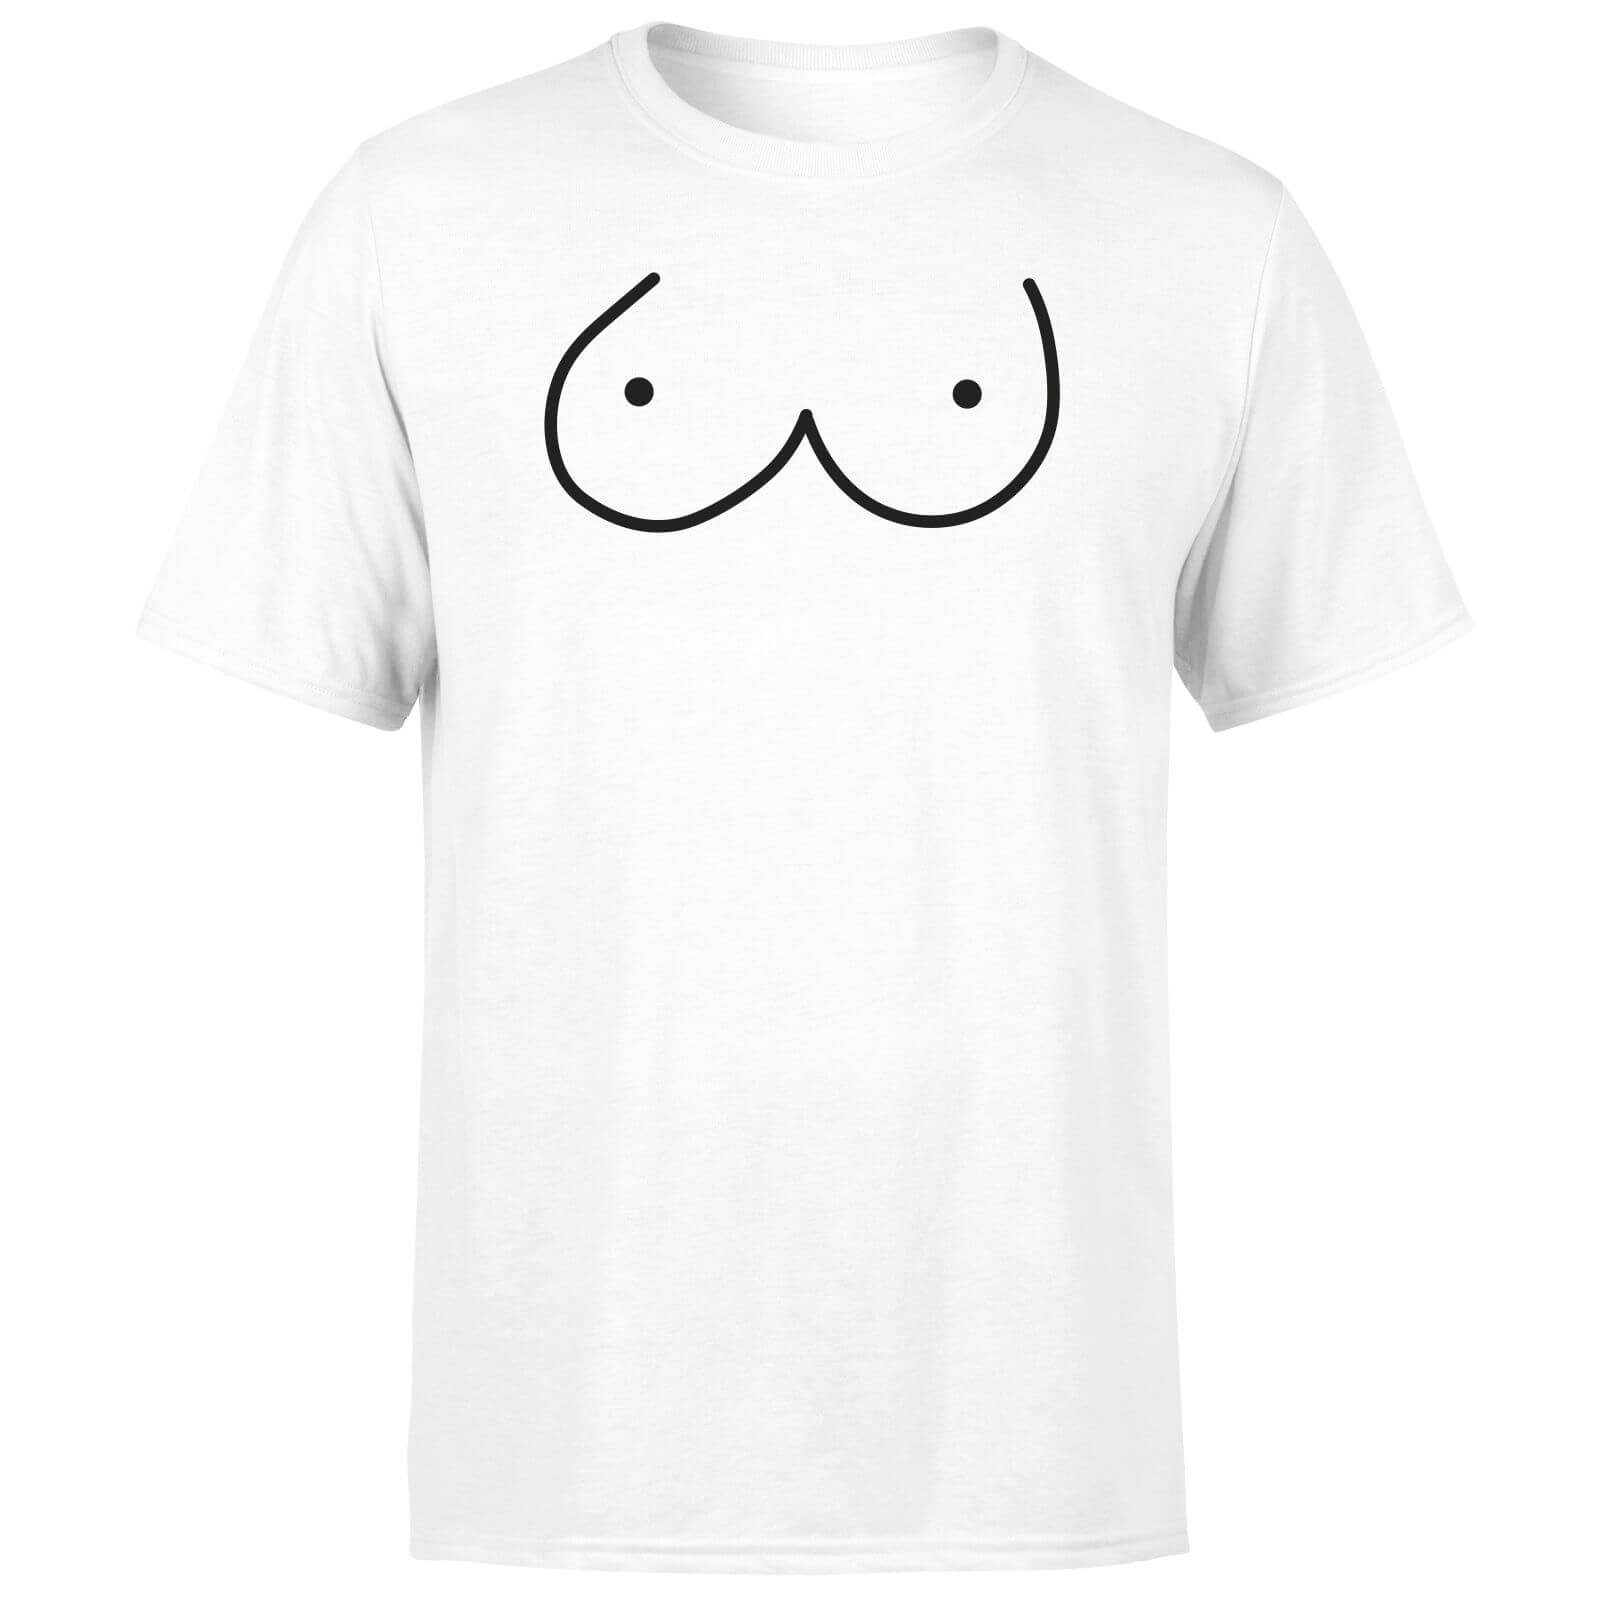 Perky Babs Men's T-Shirt - White - XS - White